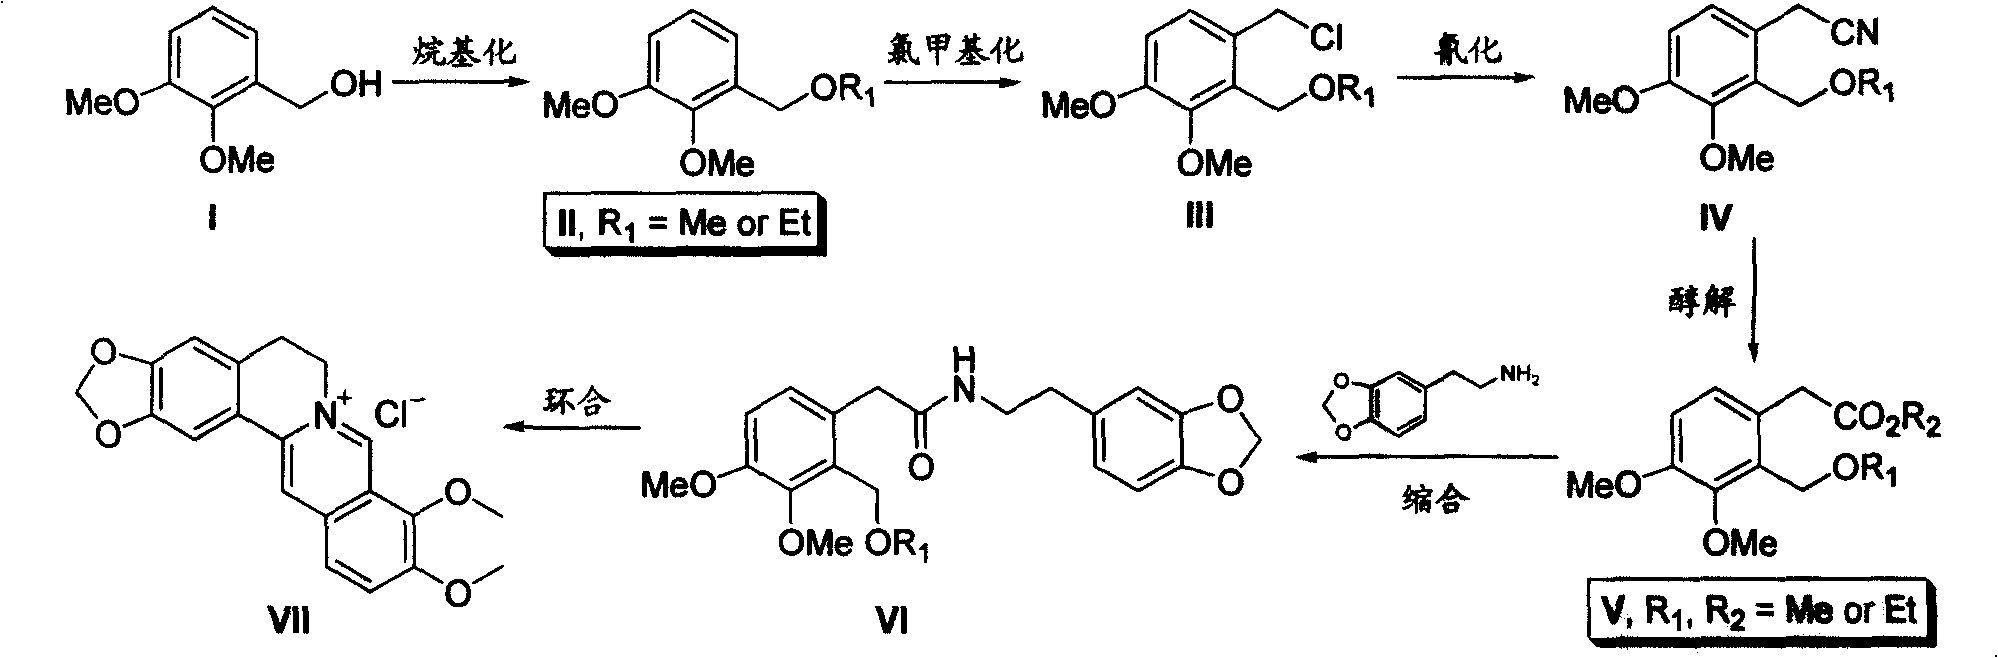 Process for producing hydrochloric berberine